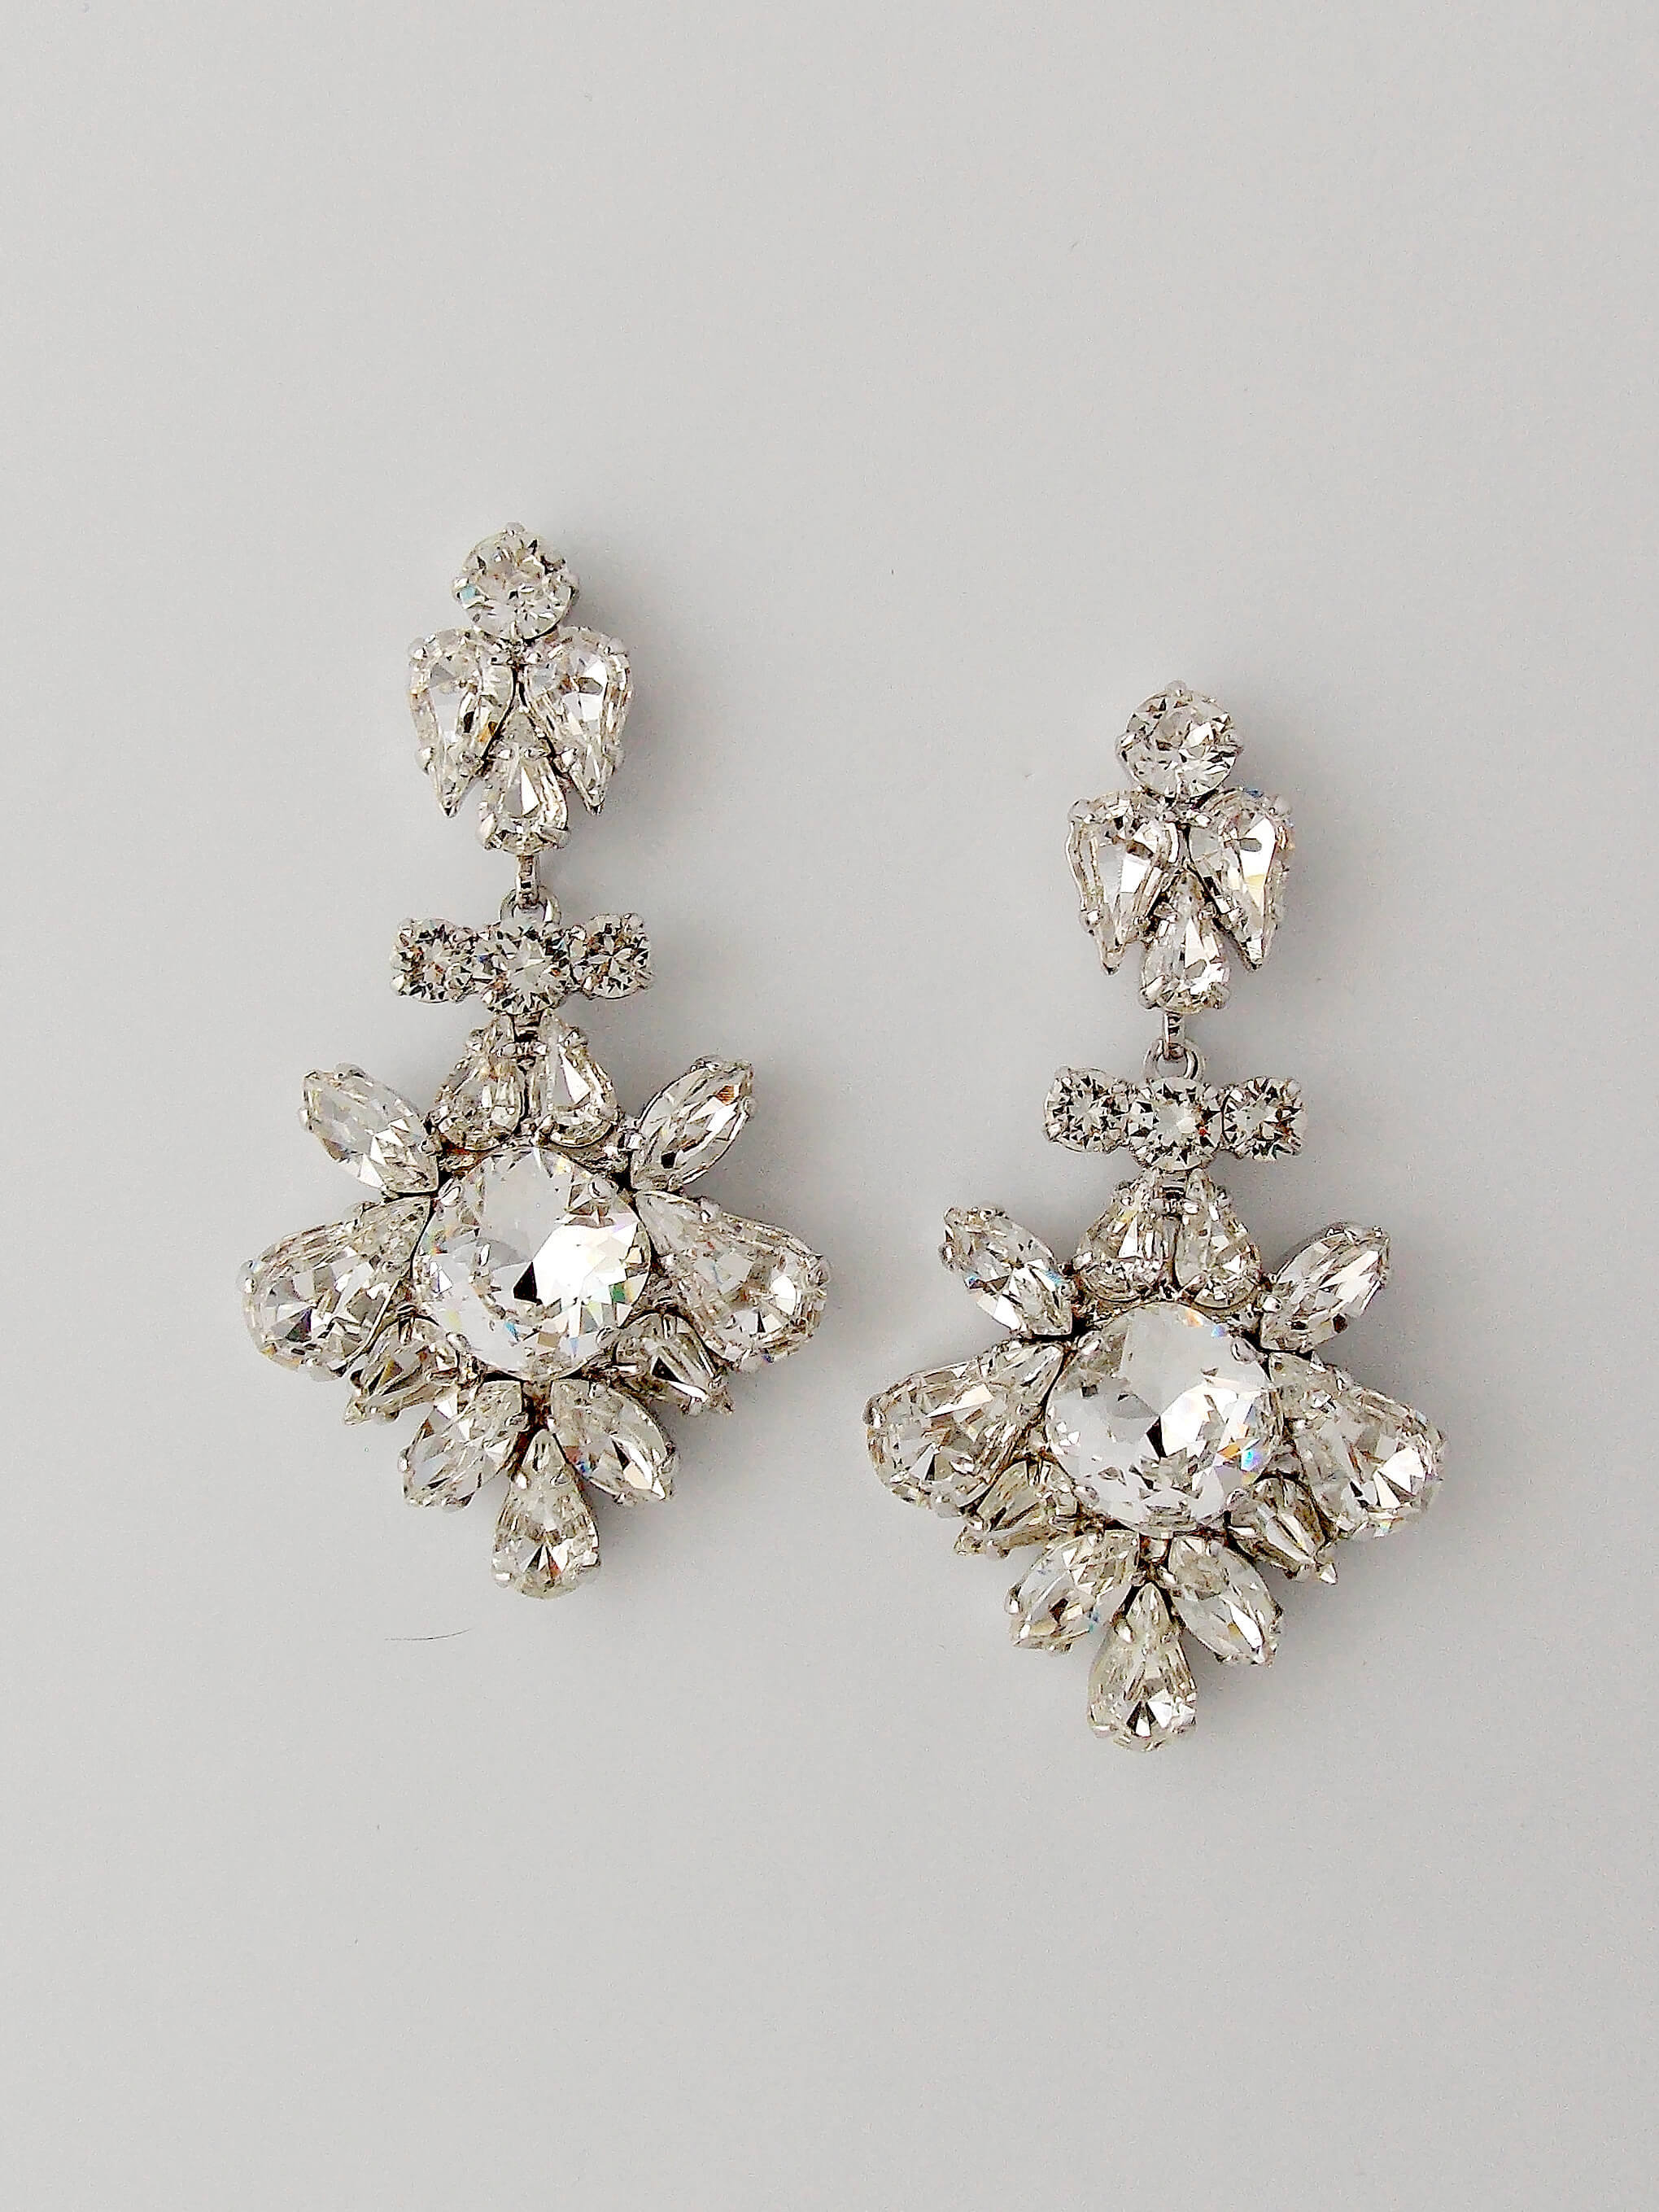 Crystal bridal chandelier earrings  Triple strand crystal chandelier  earrings  Style 2146  Twigs  Honey  LLC